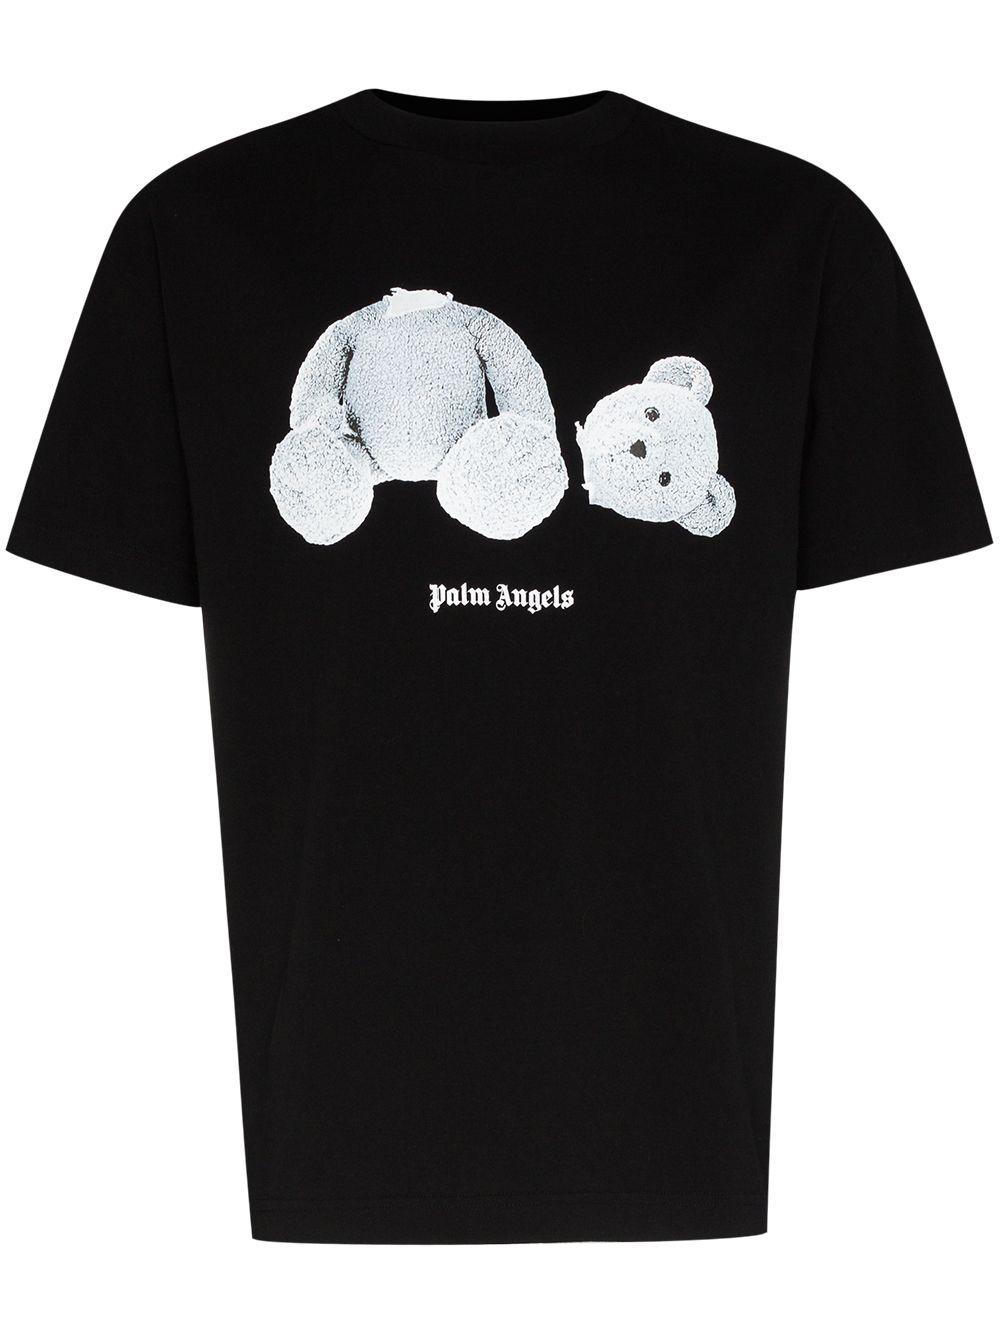 Palm Angels Cotton Teddy Bear-print T-shirt in Black for Men - Lyst